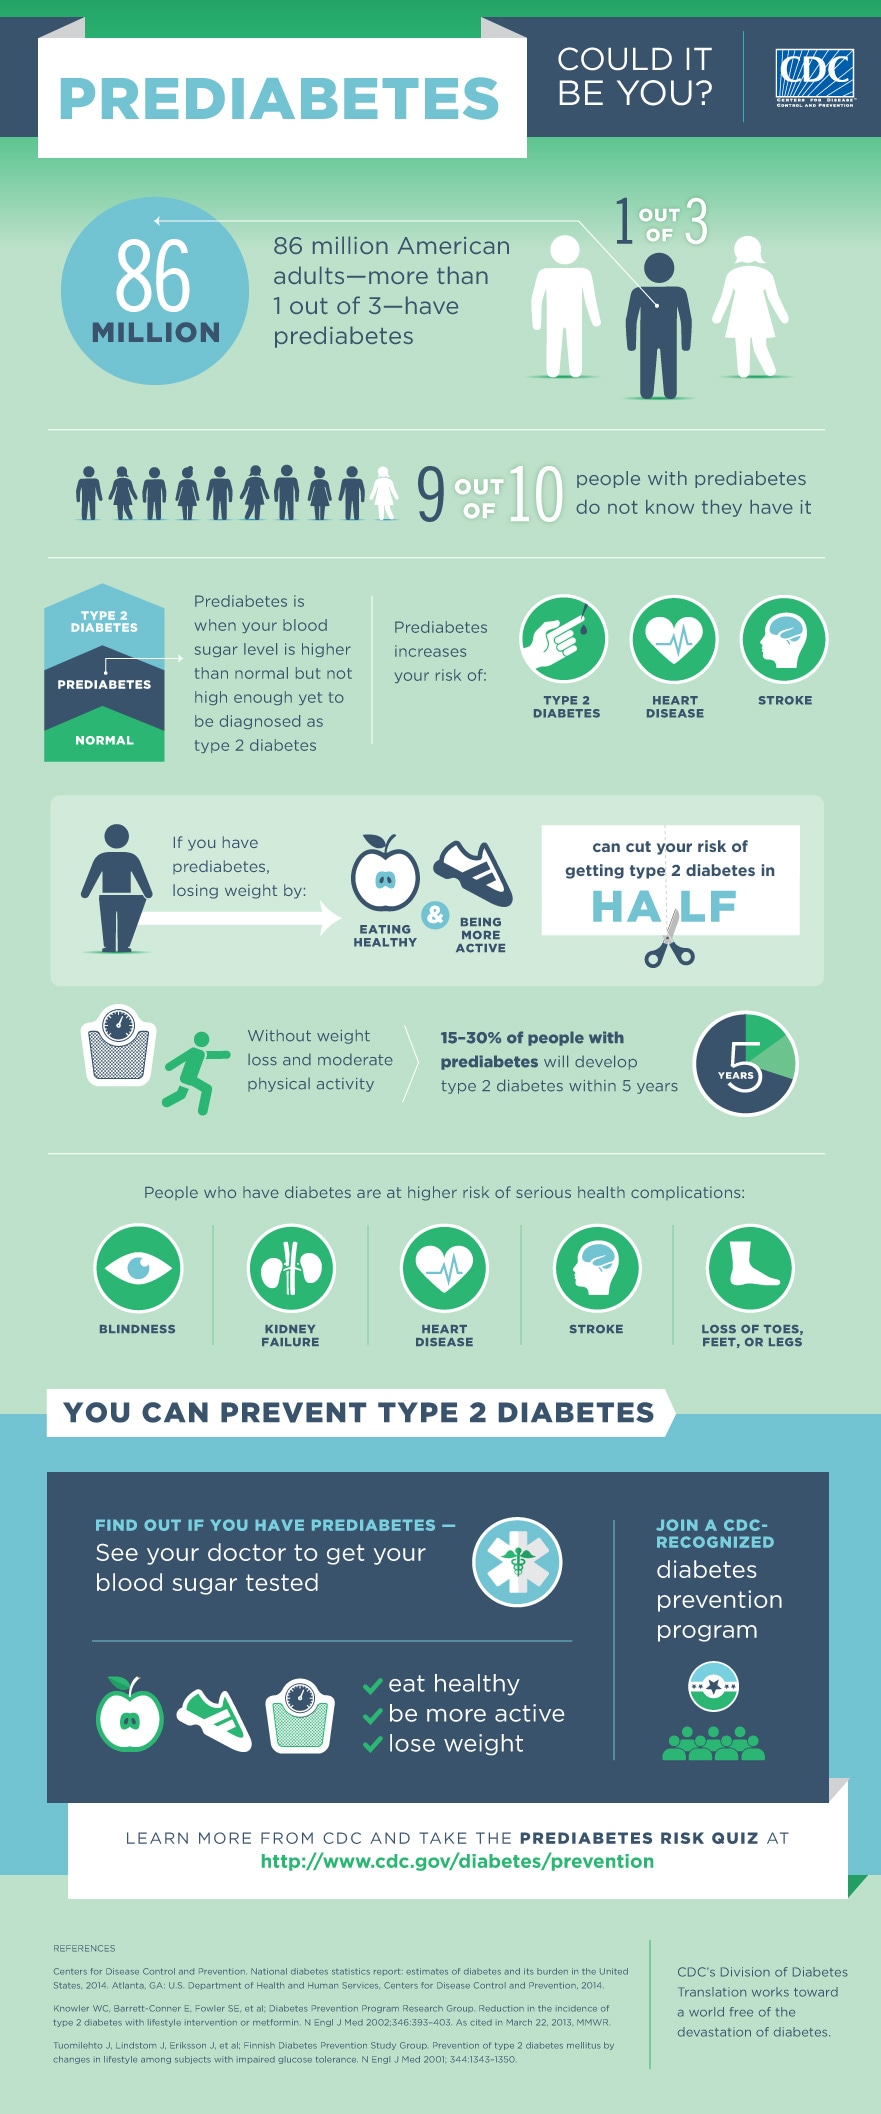 Prediabetes and cardiovascular risk